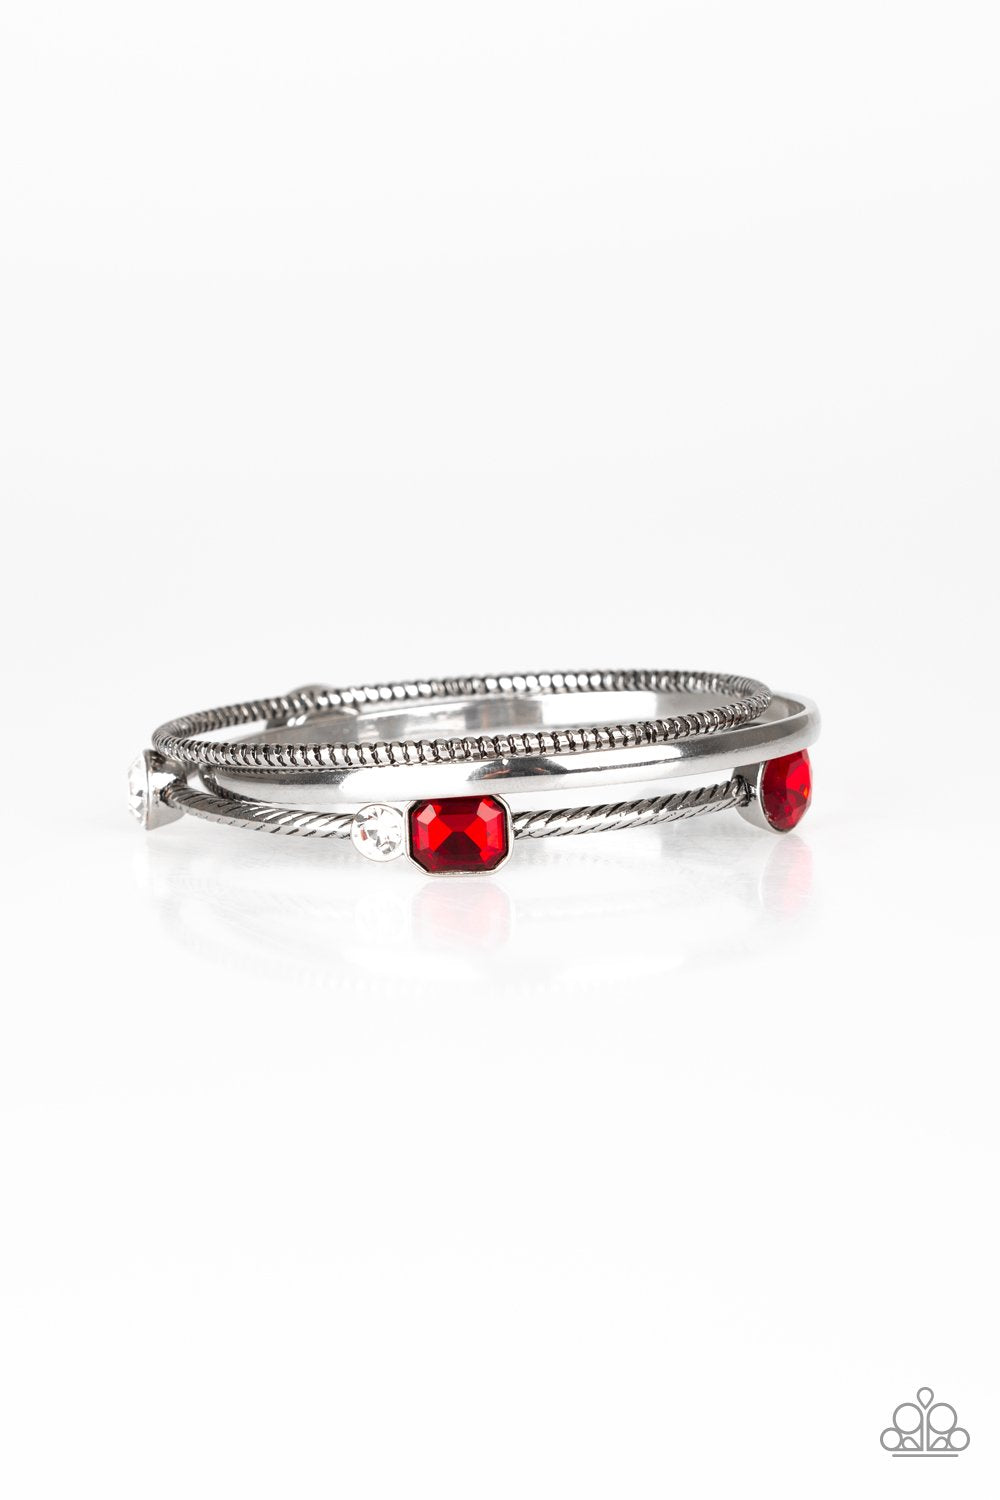 Paparazzi Accessories - City Slicker Sleek - Red Bracelet